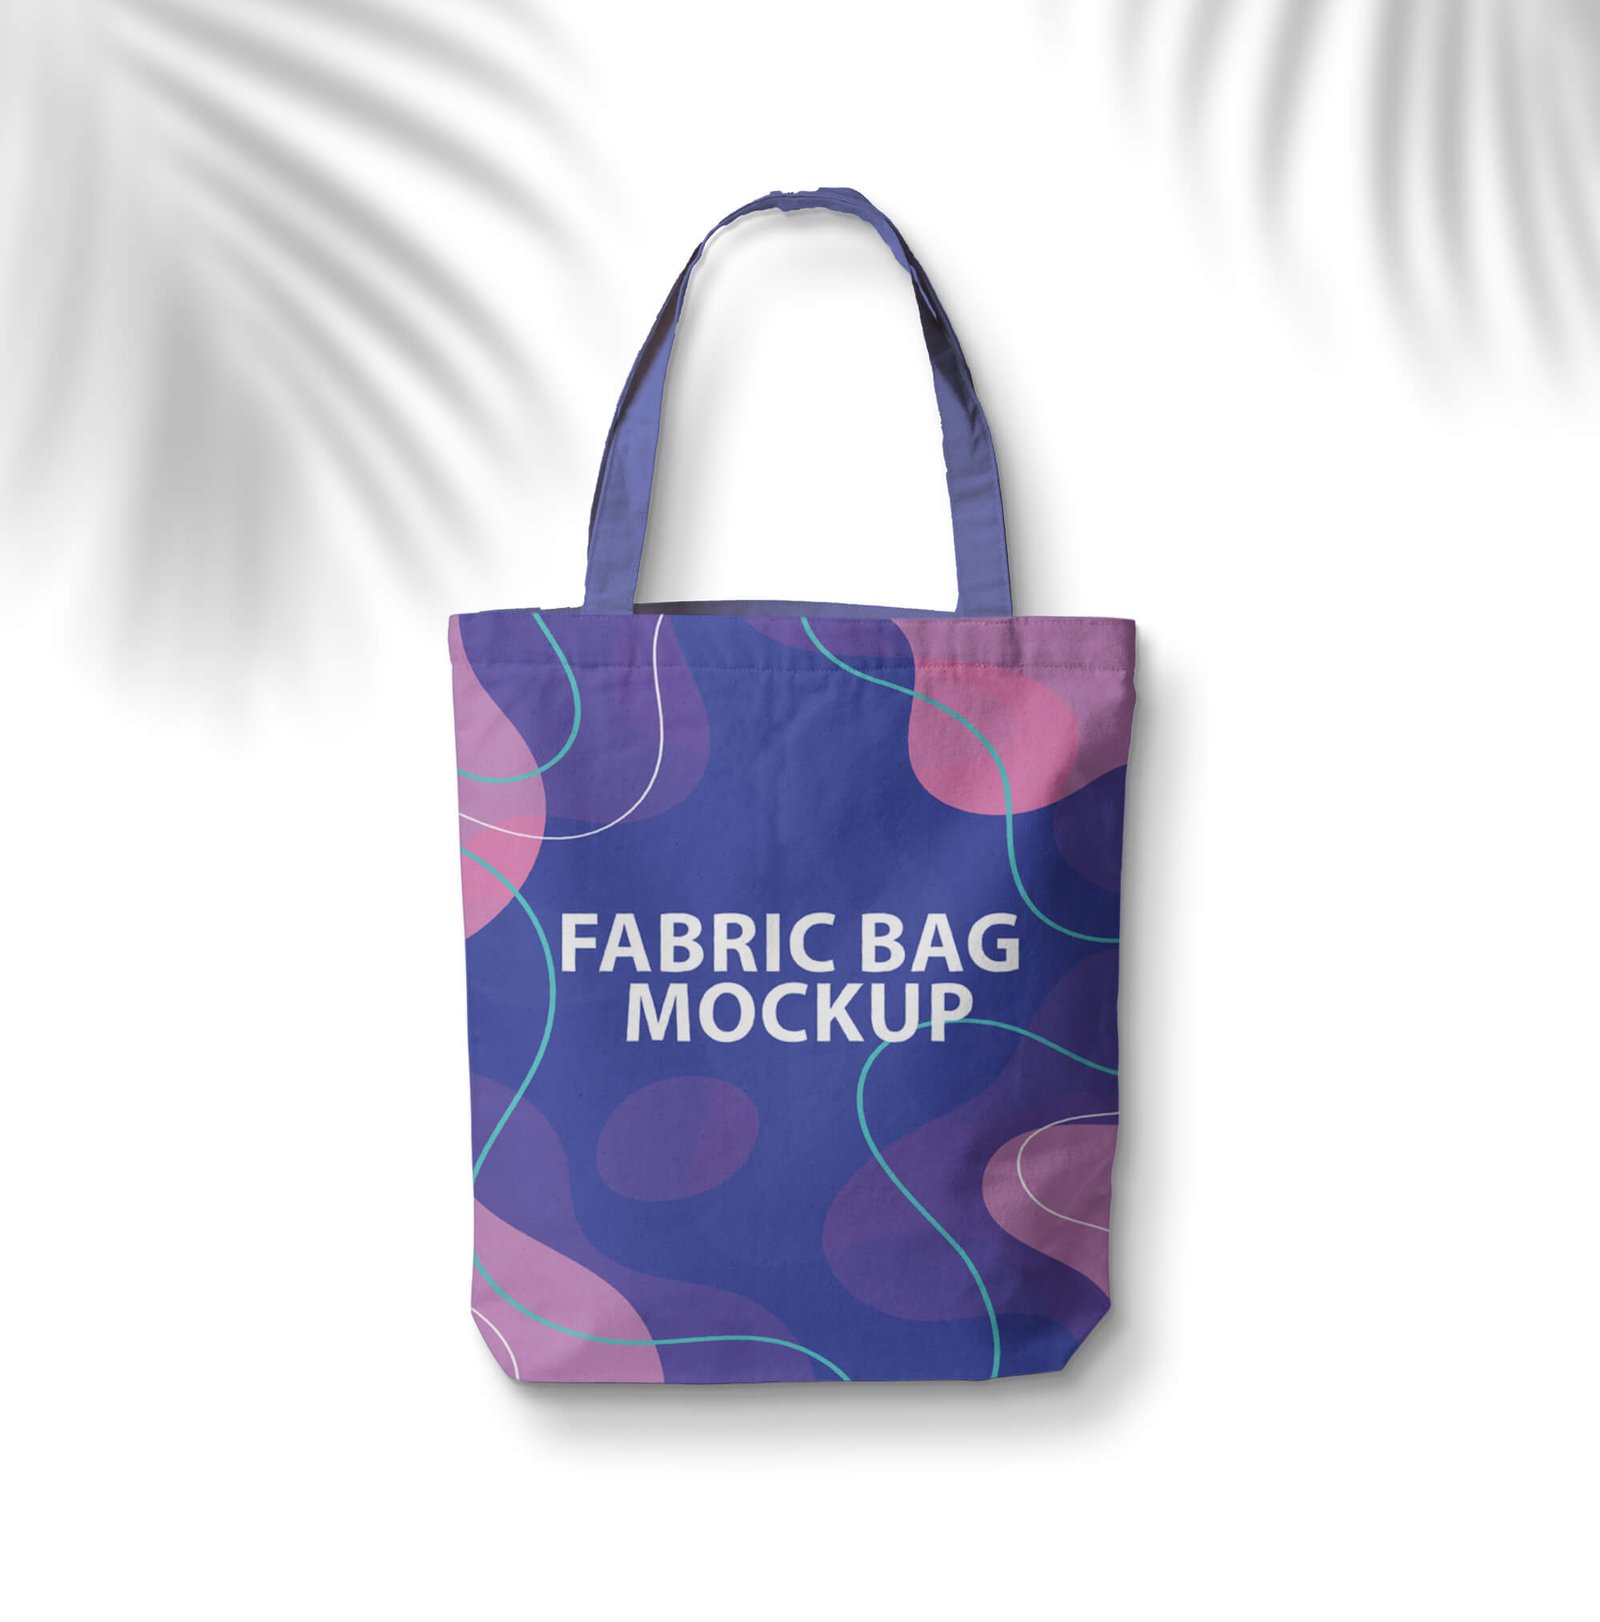 Design Free Fabric Bag Mockup PSD Template